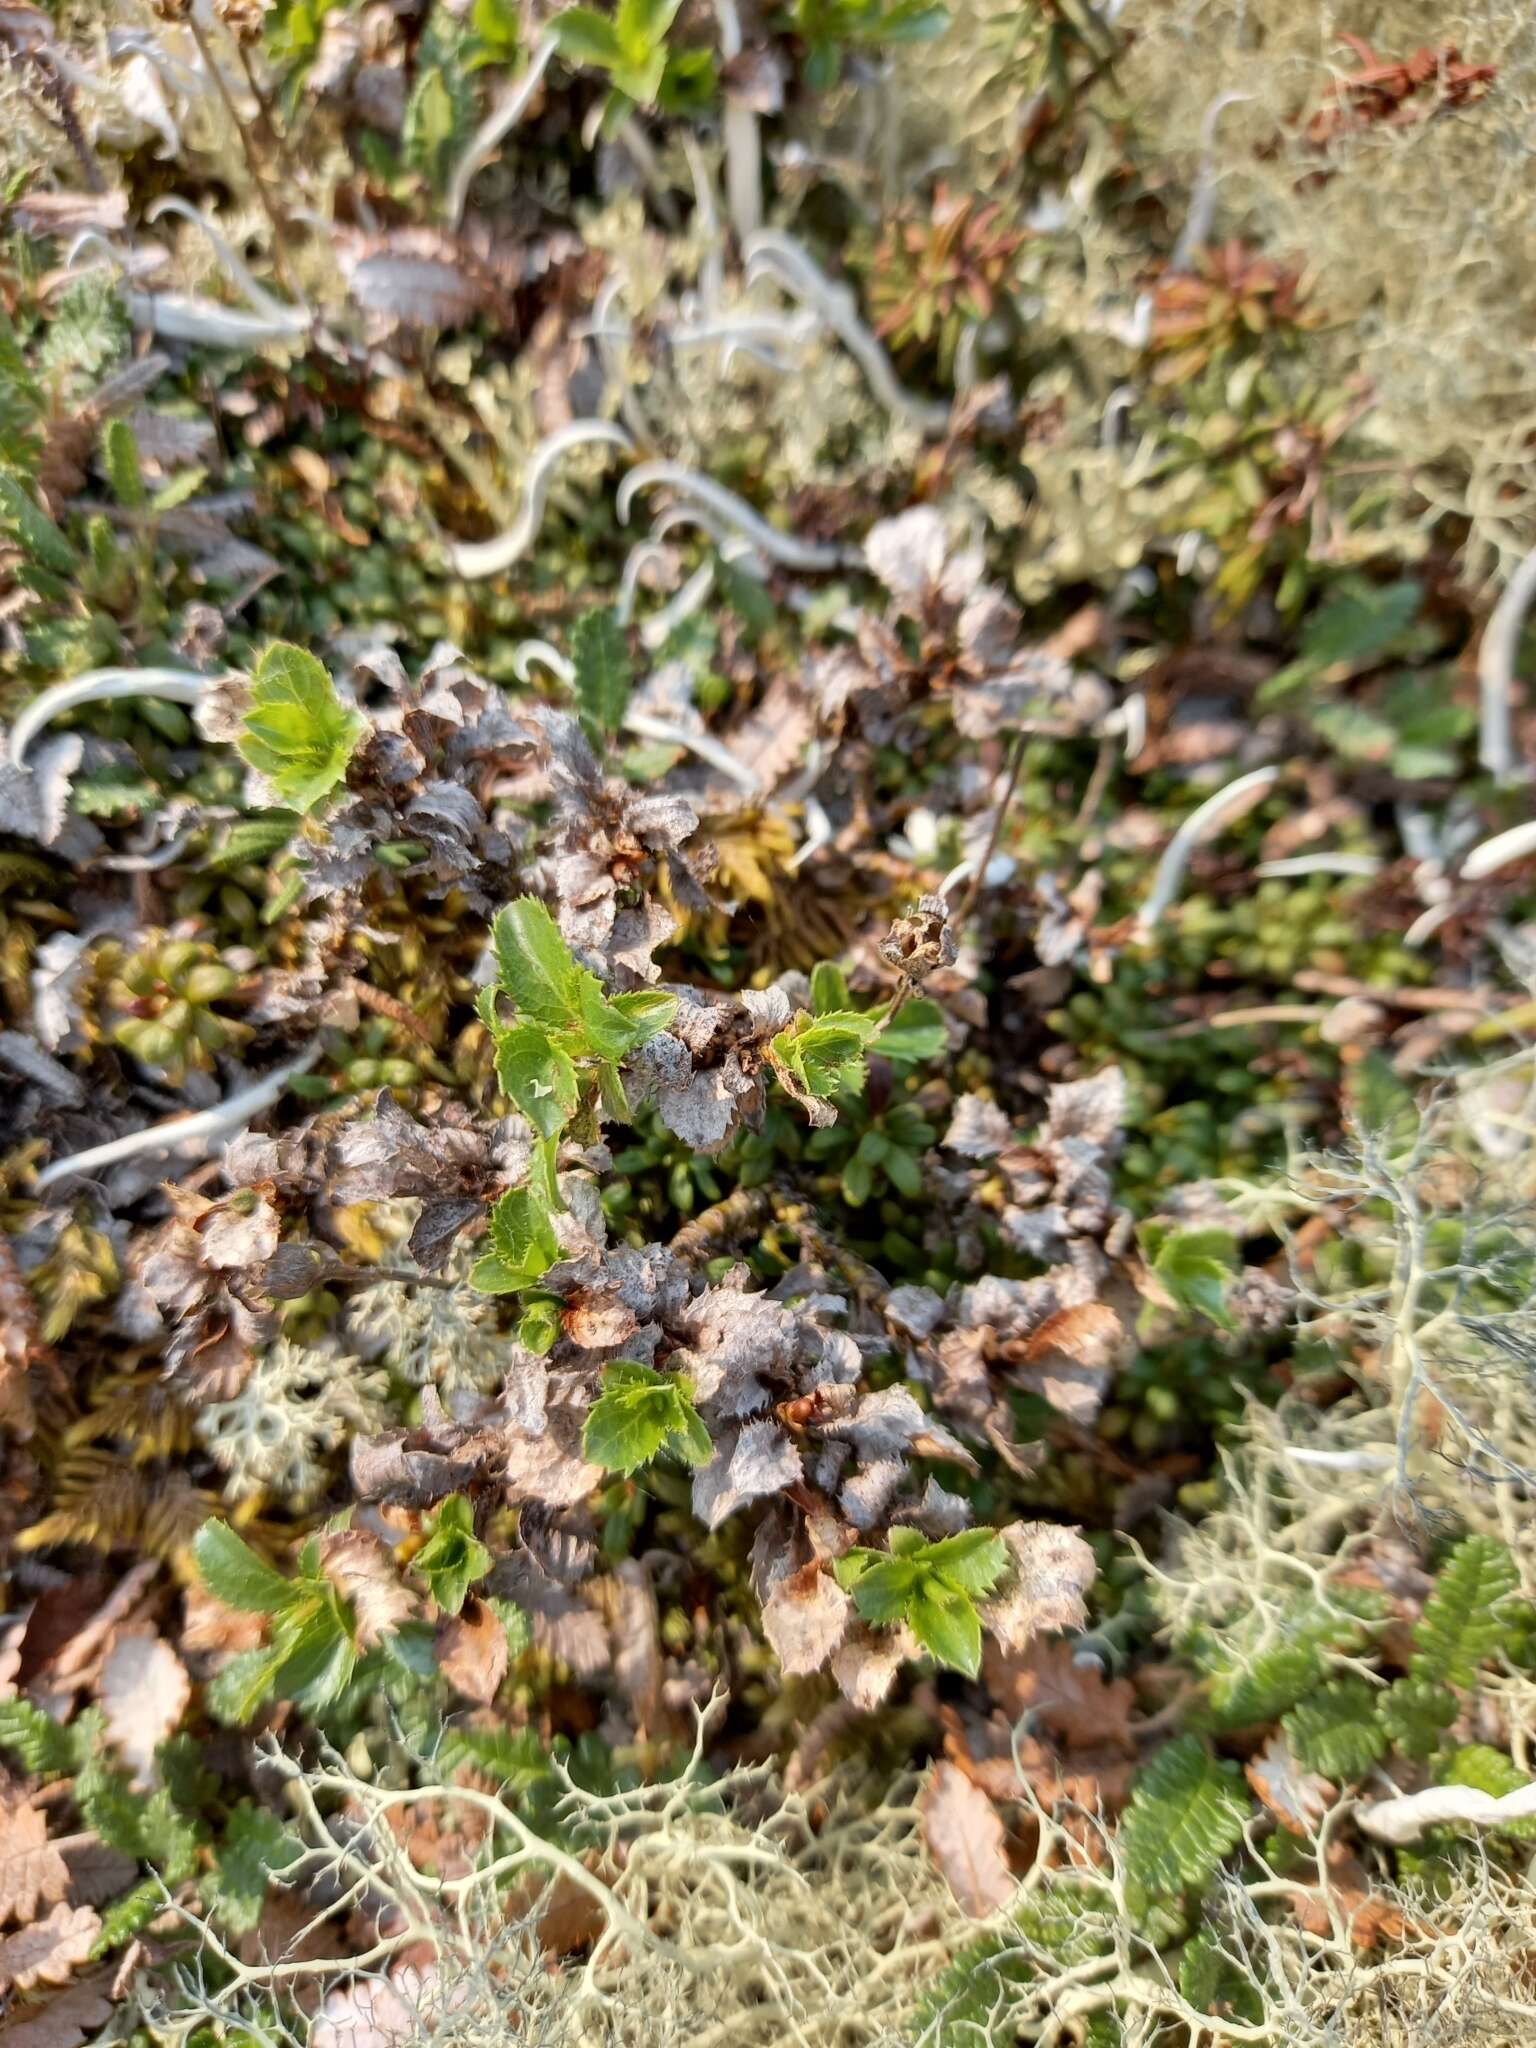 Image of Salix berberifolia subsp. tschuktschorum (A. Skvorts.) Worosch.